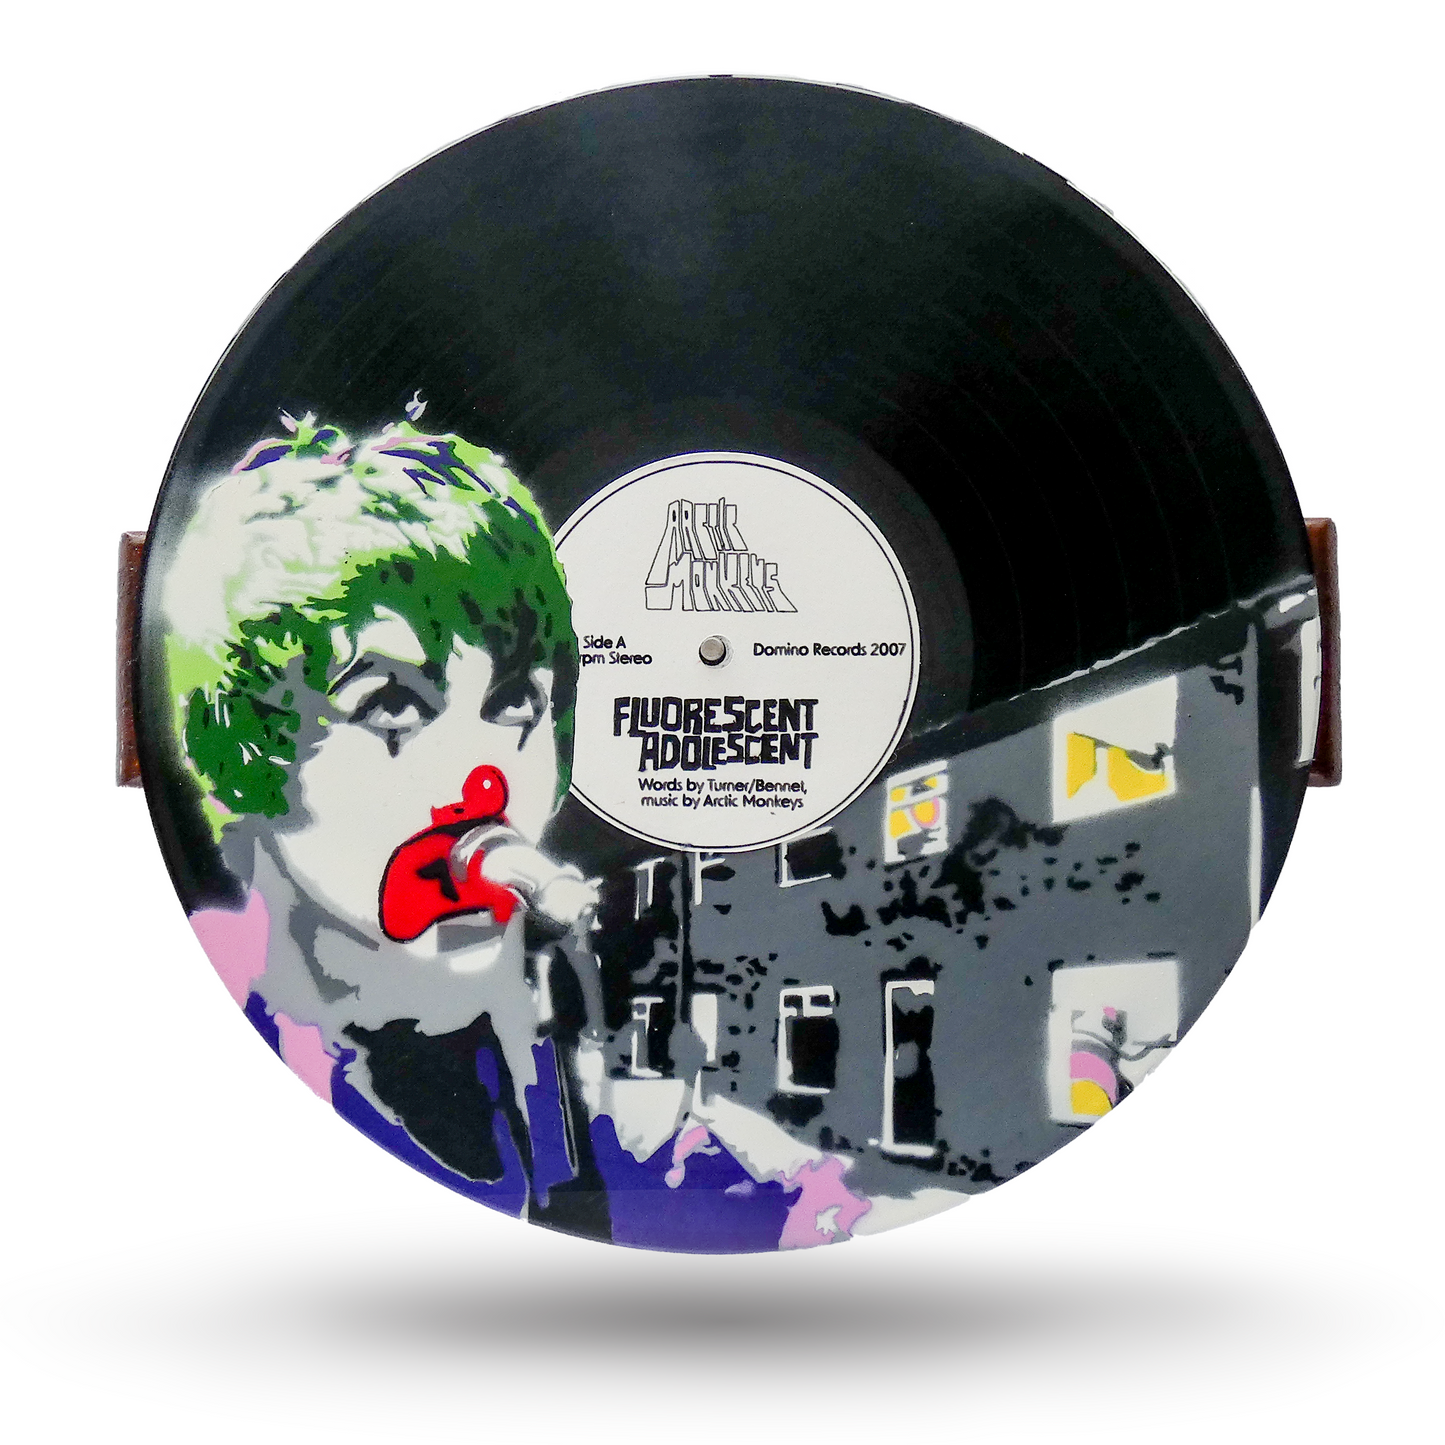 Arctic Monkeys vinyl record artwork – Hot Wax Studio